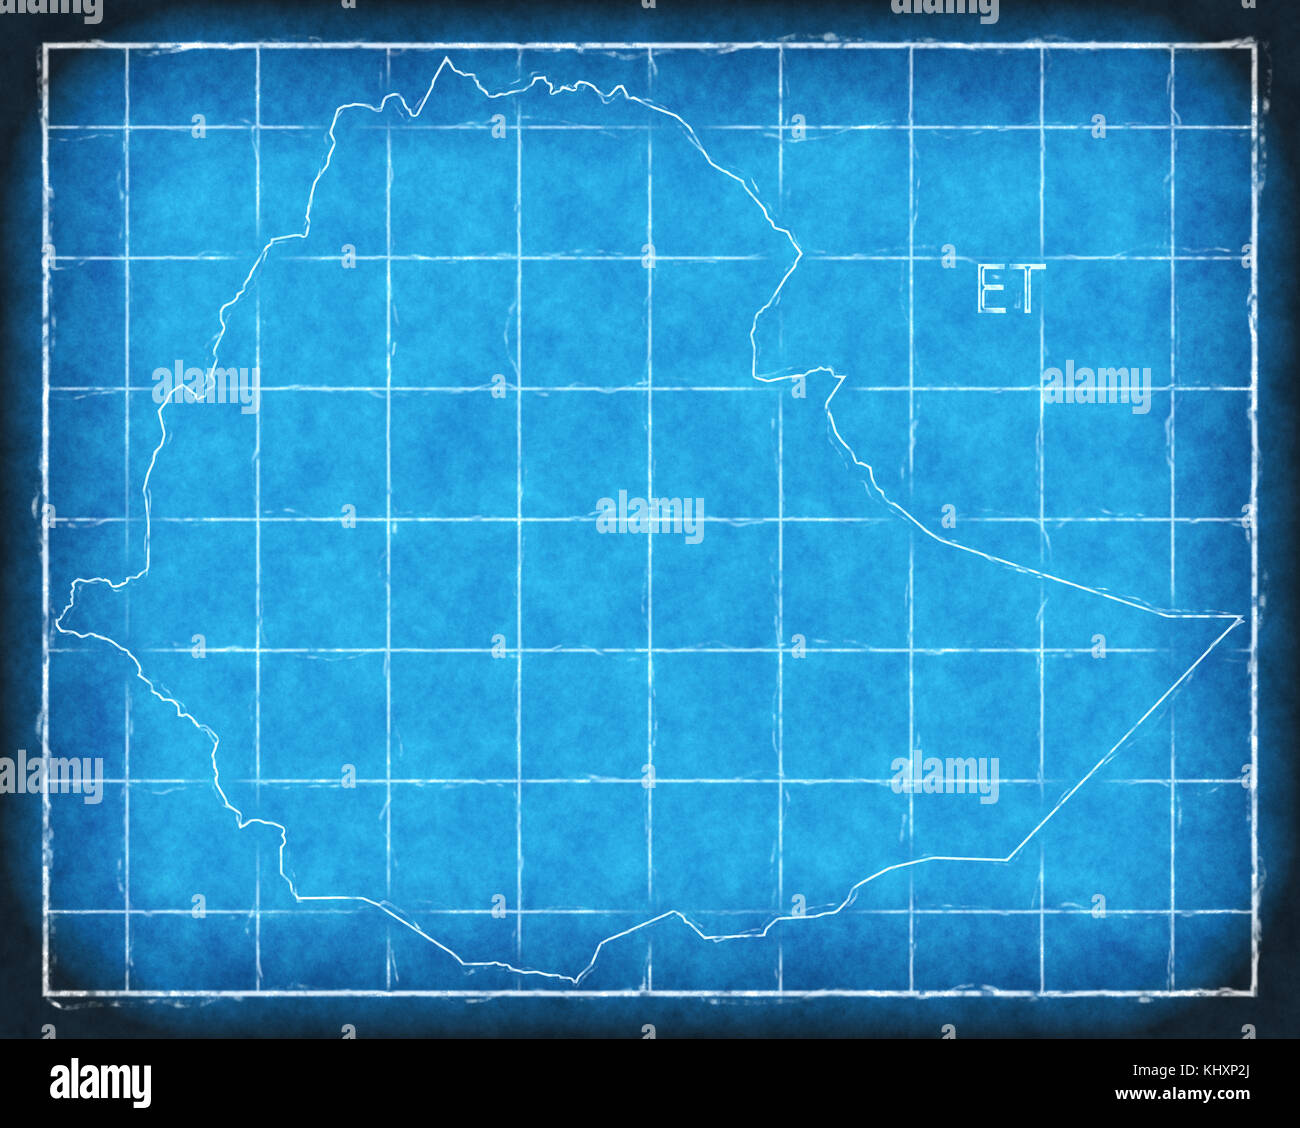 Ethiopia map blue print artwork illustration silhouette Stock Photo